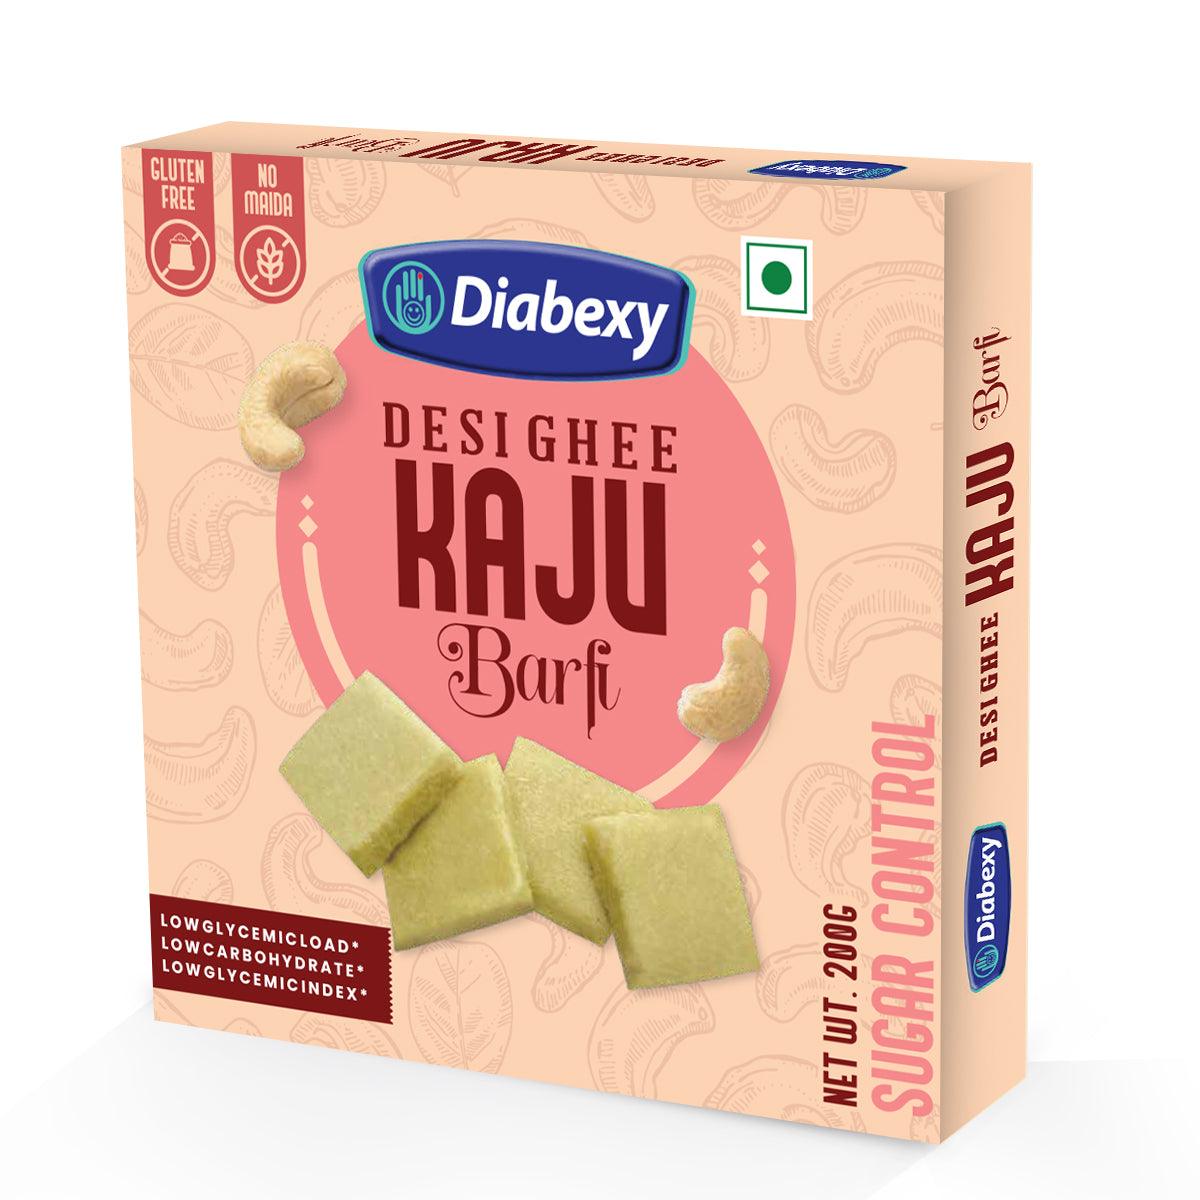 Diabexy Desi Ghee Sugar Free Kaju Barfi - 200g - Diabexy